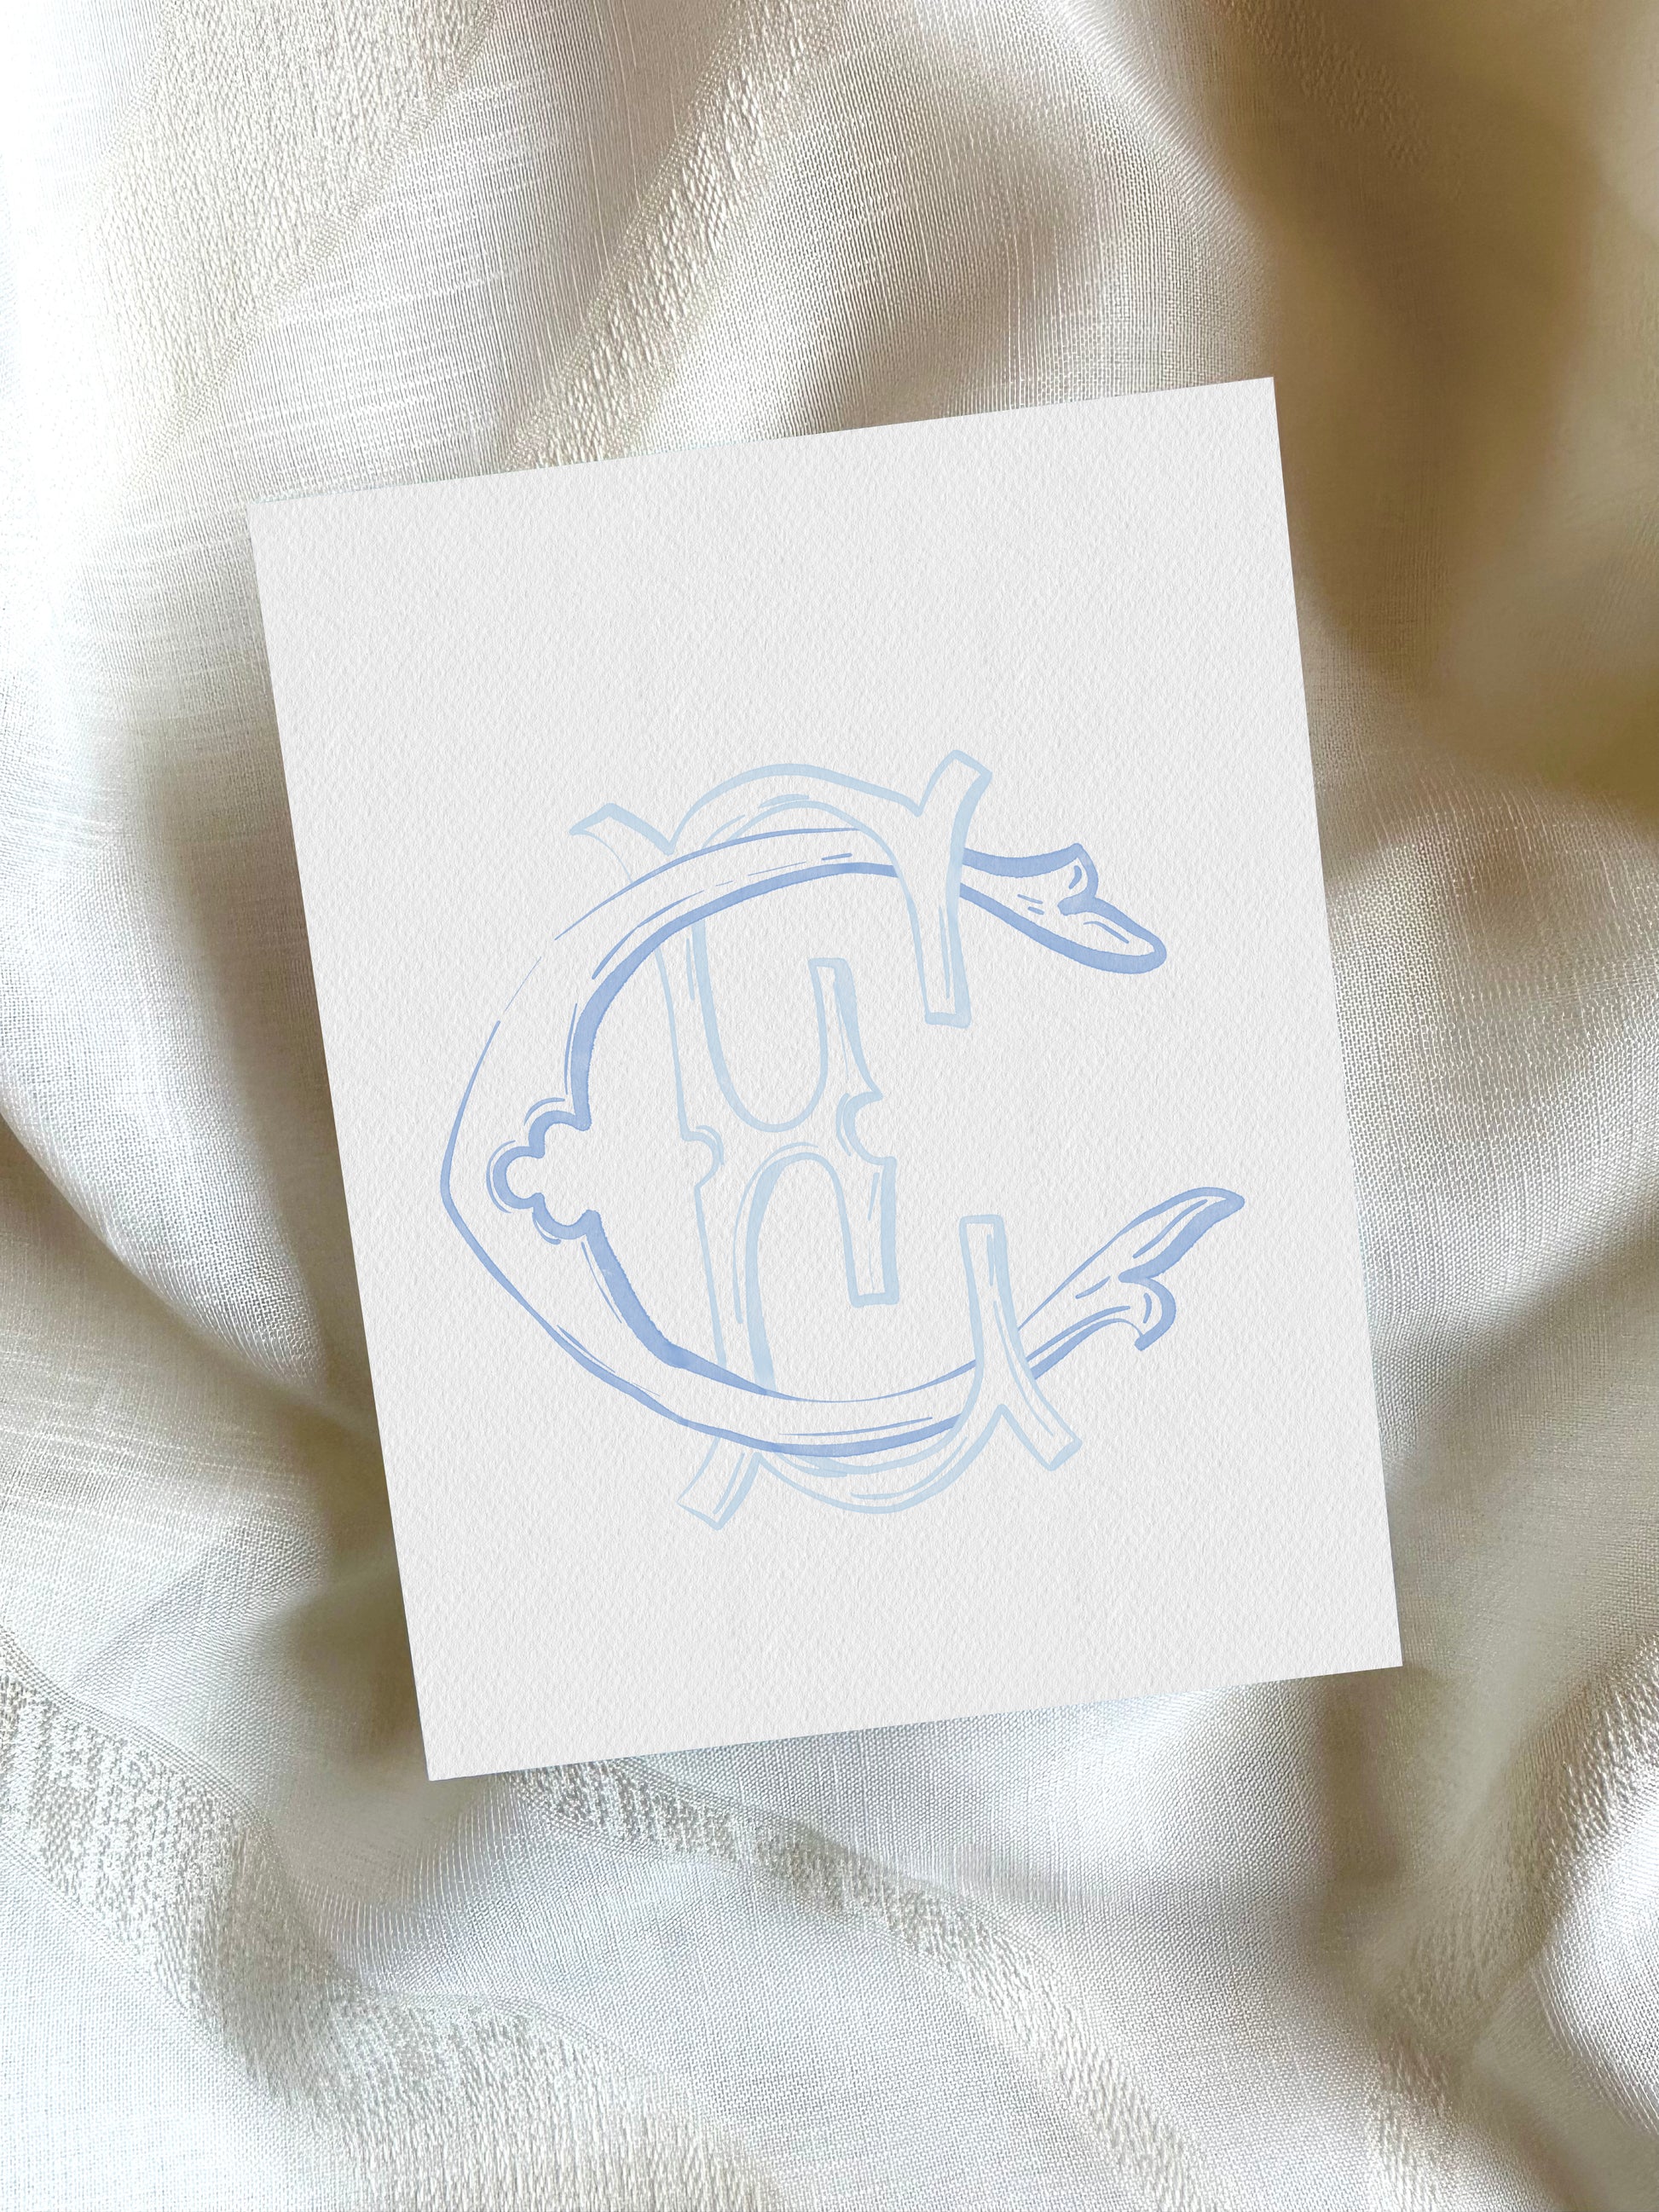 2 Letter Monogram with Letters CE EC | Digital Download - Wedding Monogram SVG, Personal Logo, Wedding Logo for Wedding Invitations The Wedding Crest Lab